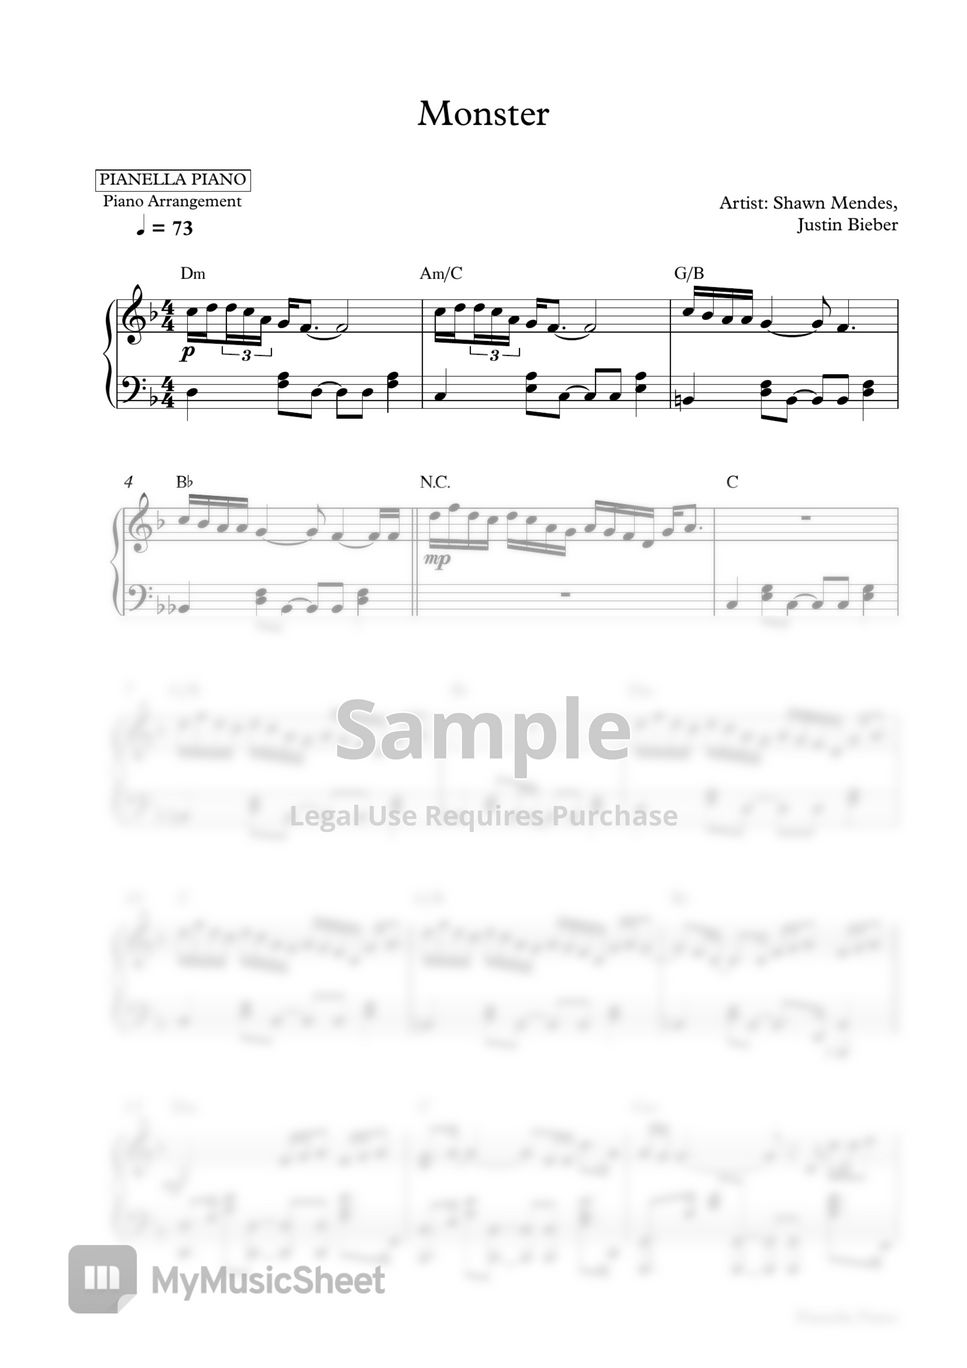 Shawn Mendes, Justin Bieber - Monster (Piano Sheet) by Pianella Piano